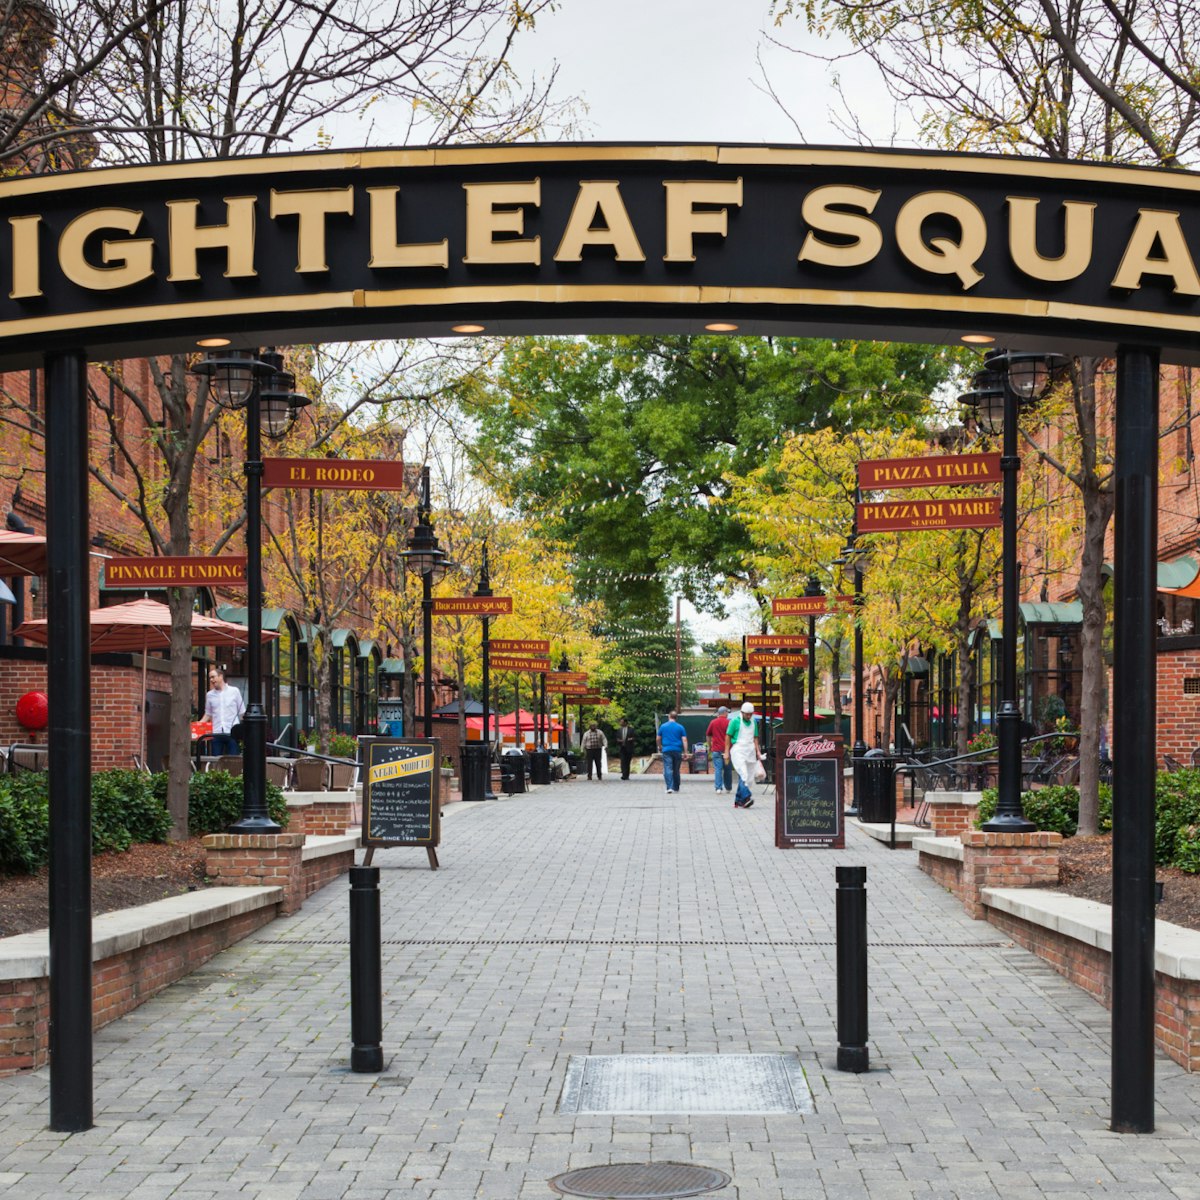 USA, North Carolina, Durham, sign for Brightleaf Square, entertainment complex, set in former tobacco warehouses.